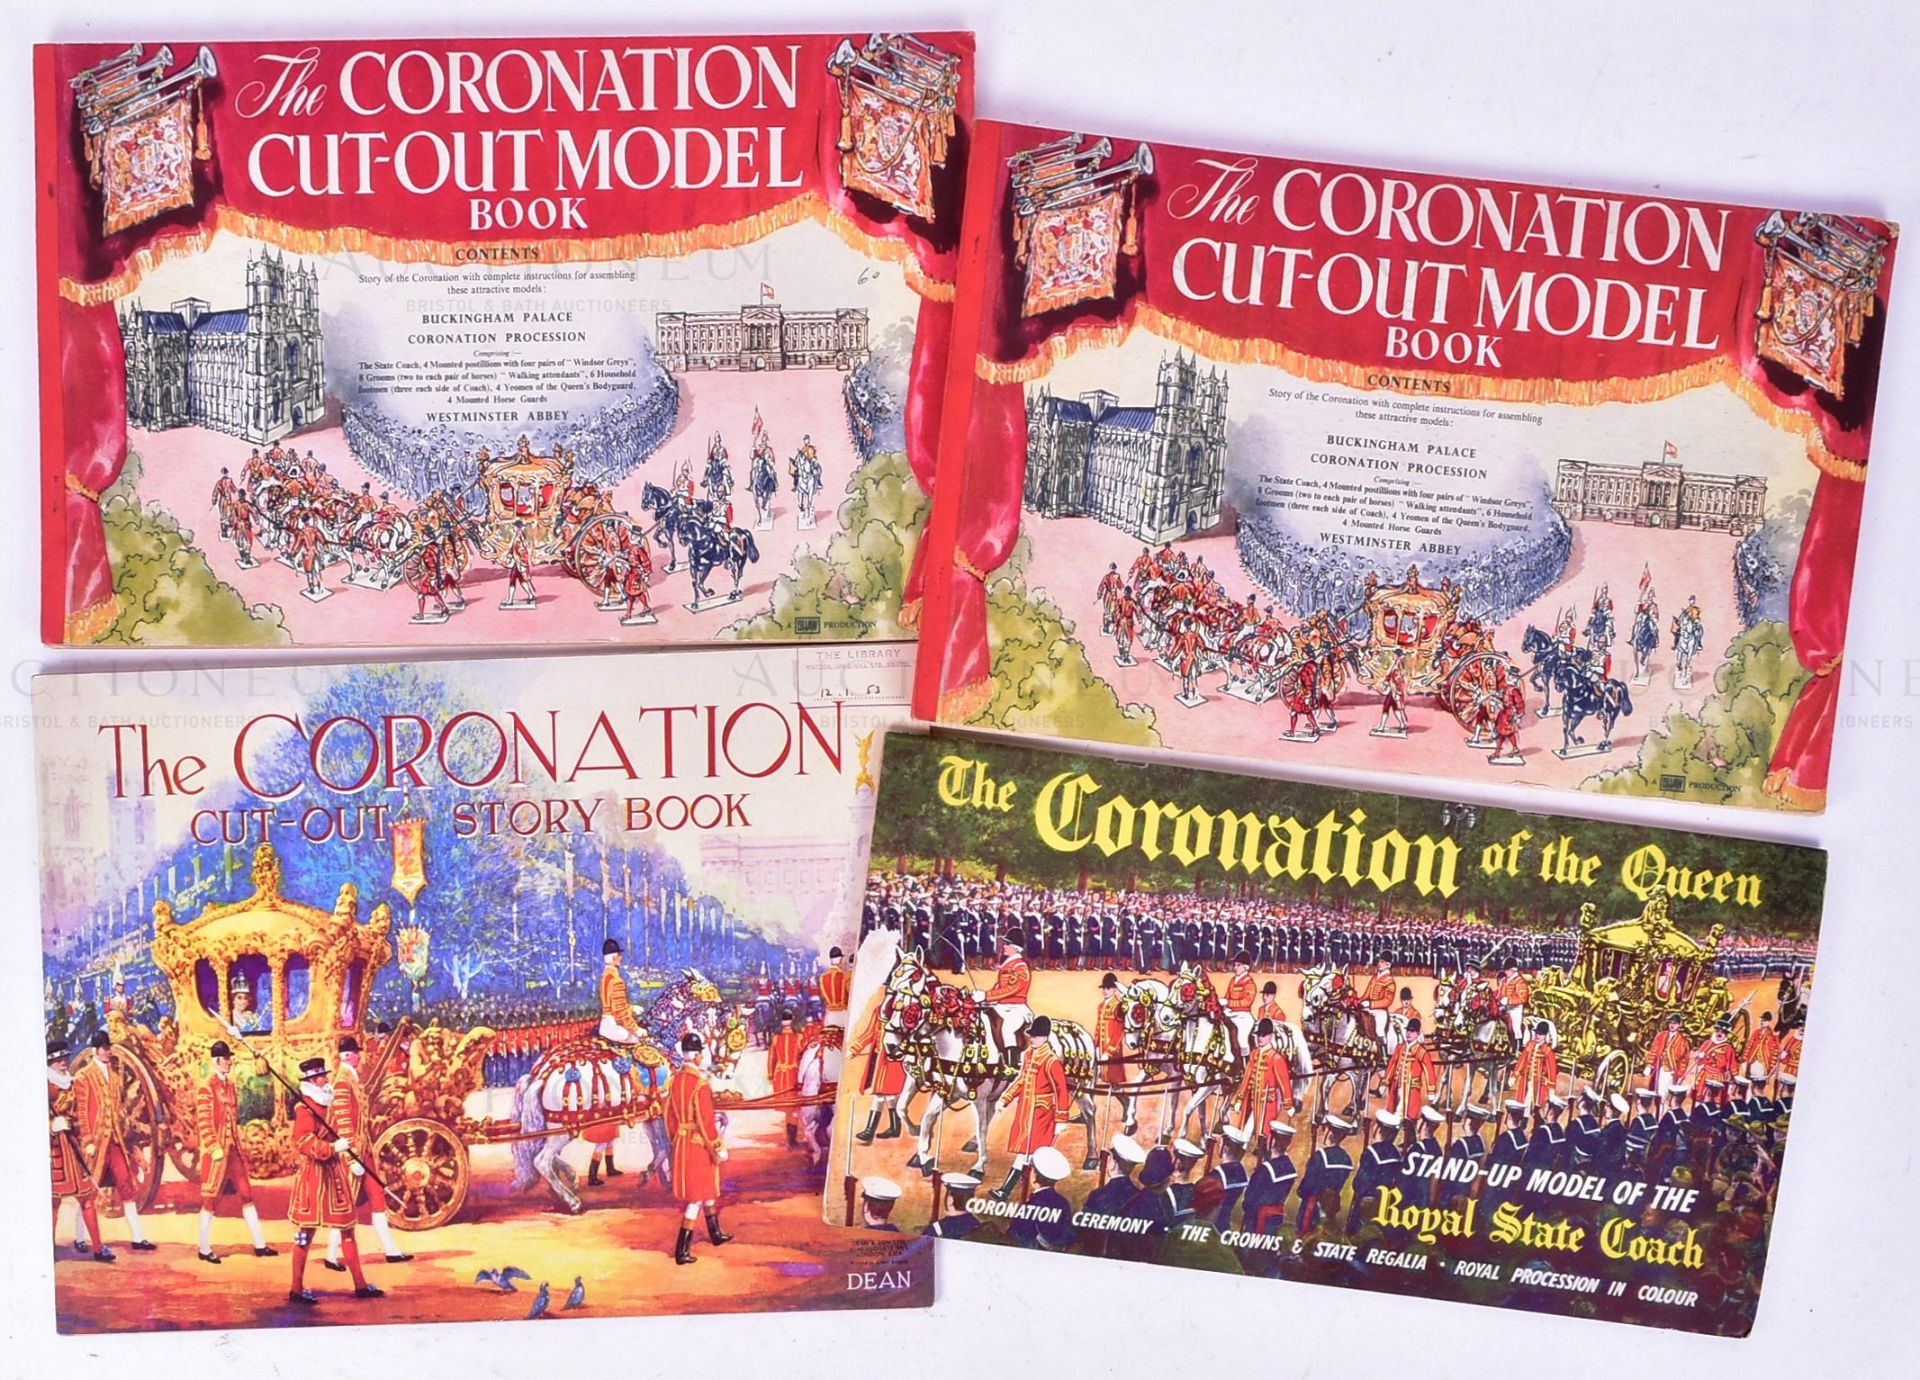 THE CORONATION - CUT-OUT MODEL BOOKS